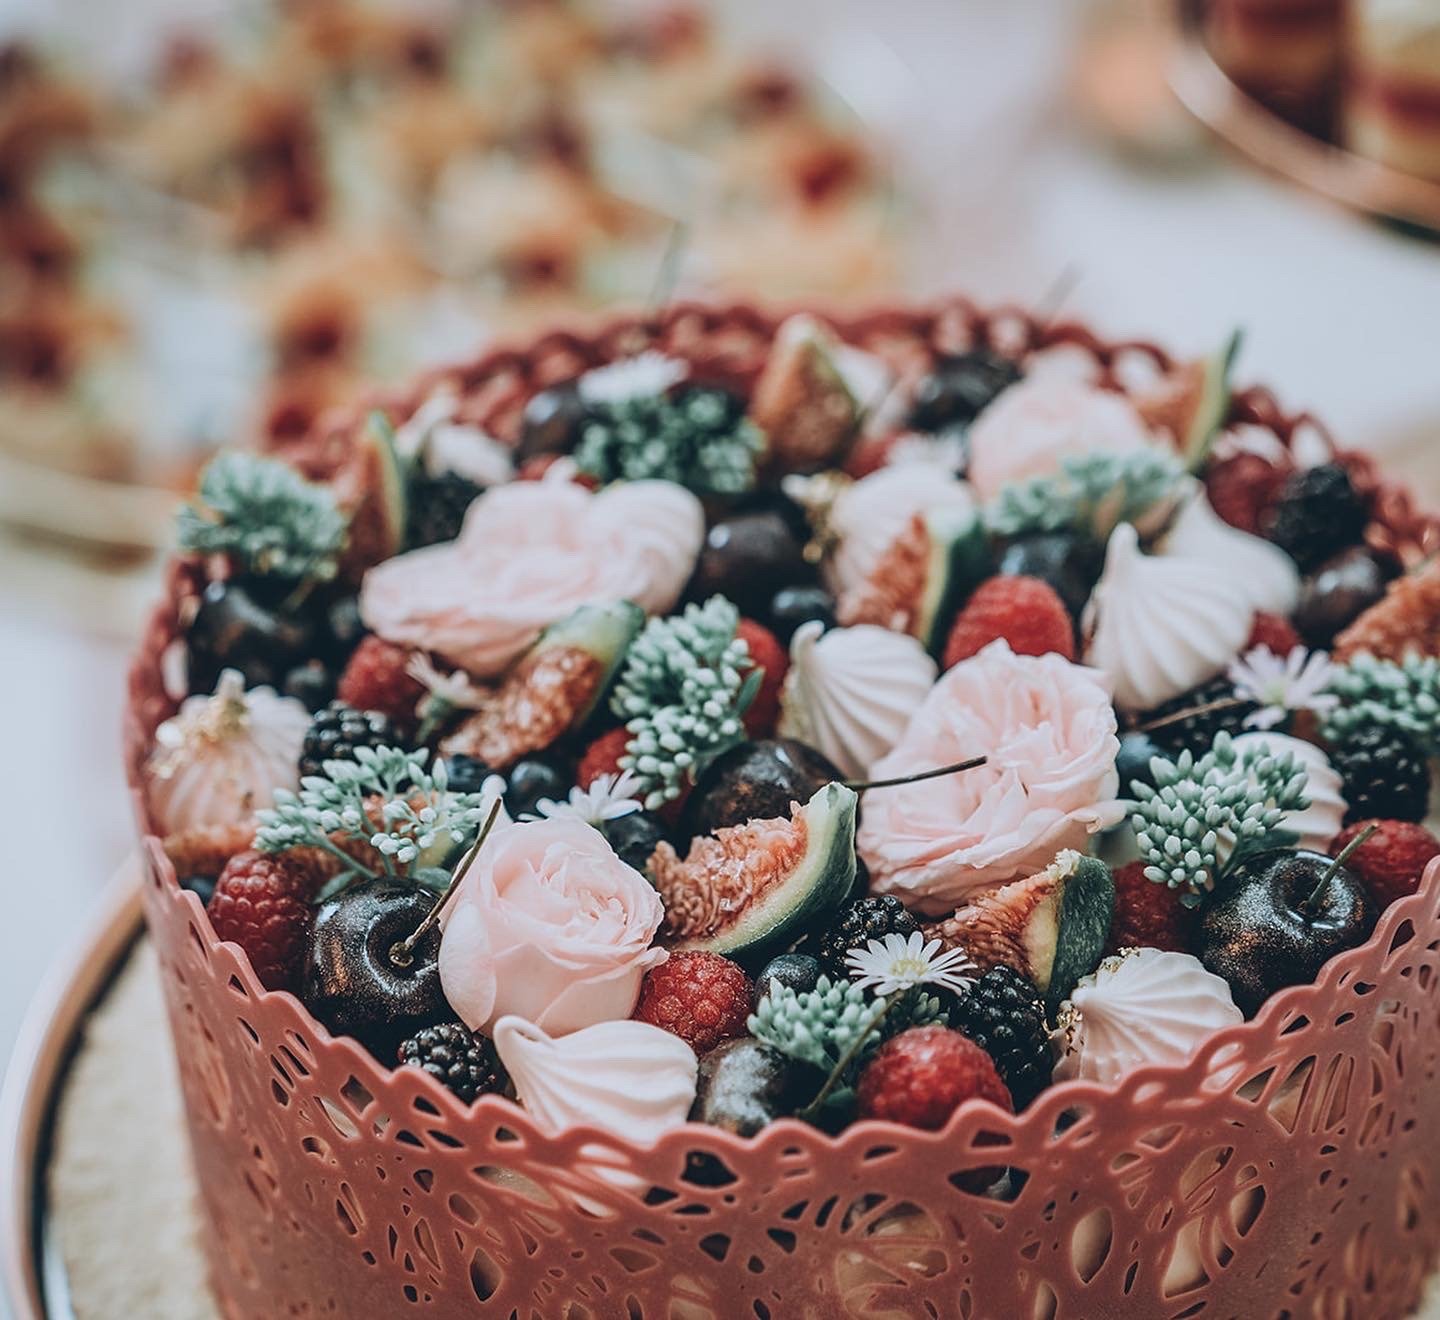 Traditional Italian wedding cakes